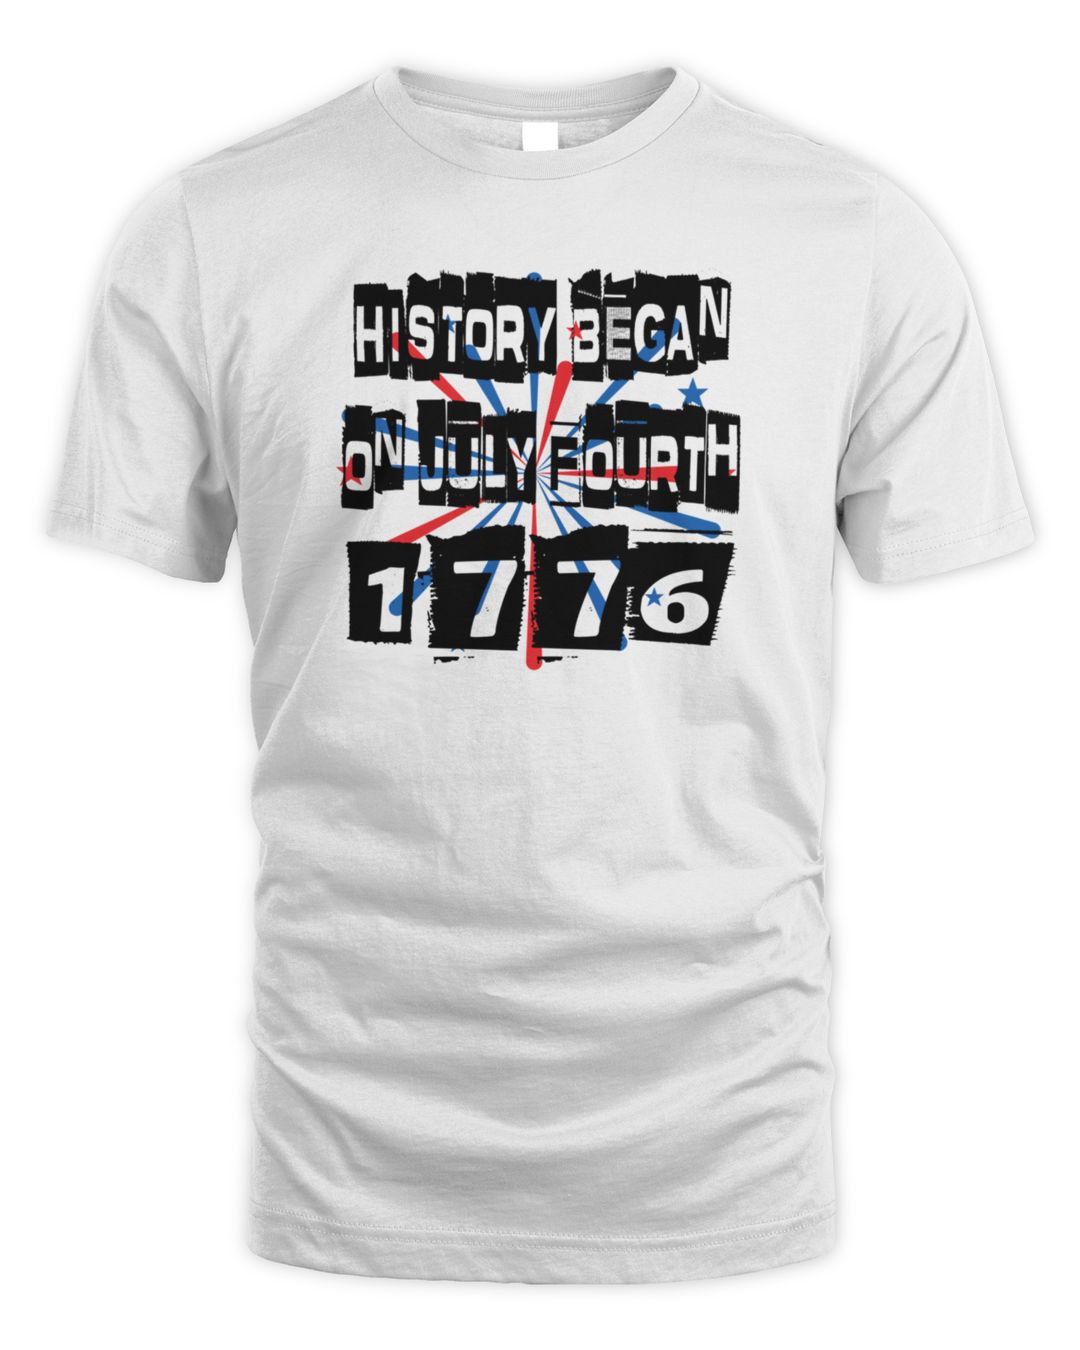 History began on fourth of july 1776 tshirt History began on fourth of ...